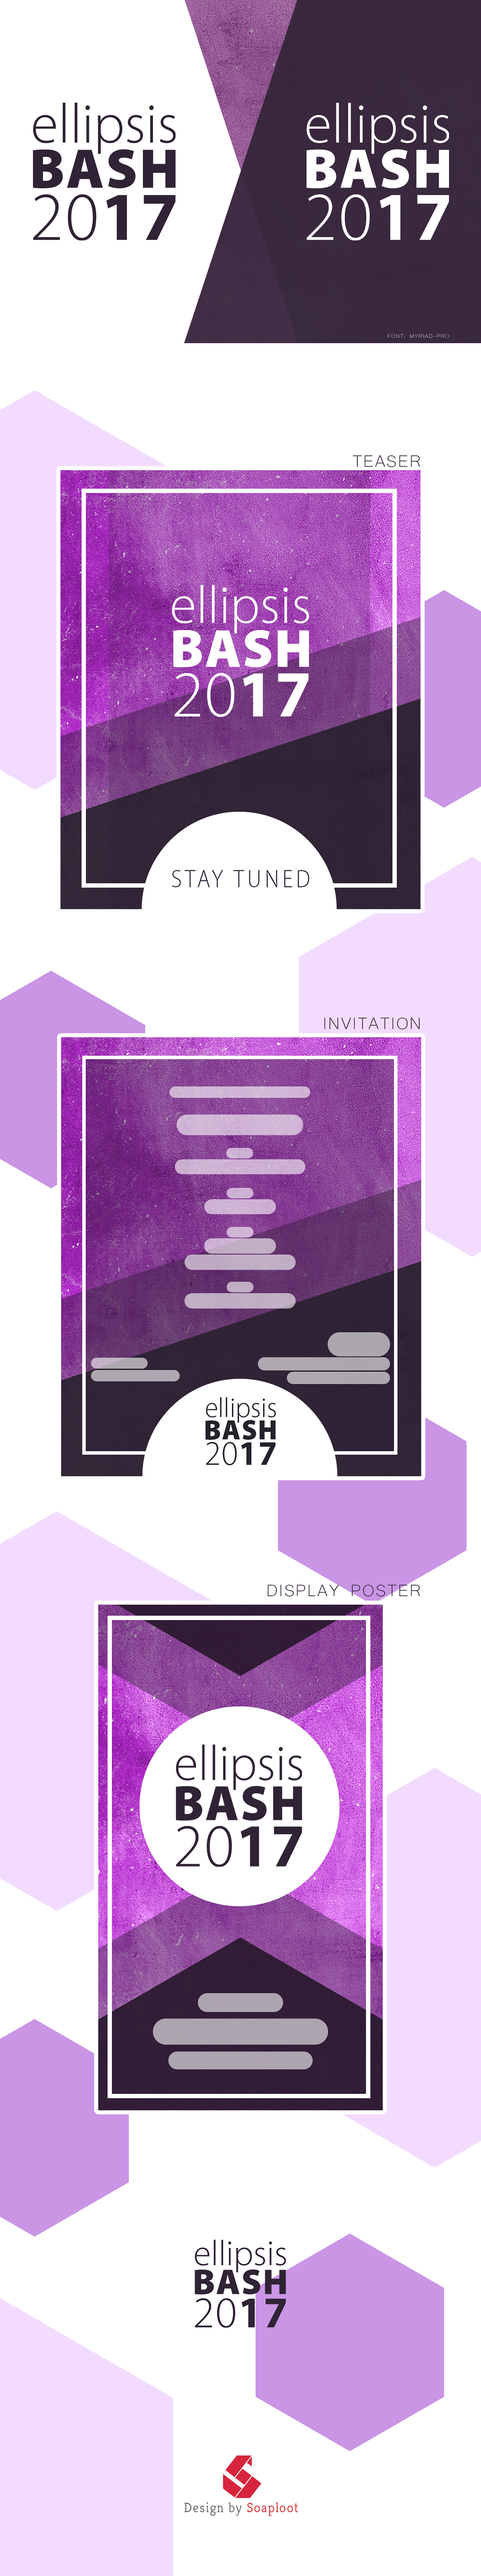 ellipsis ellipsisBash ellipsis Bash 2017 Bash 2017 anniversary anniversary party celebrations purple and black Theme Purple